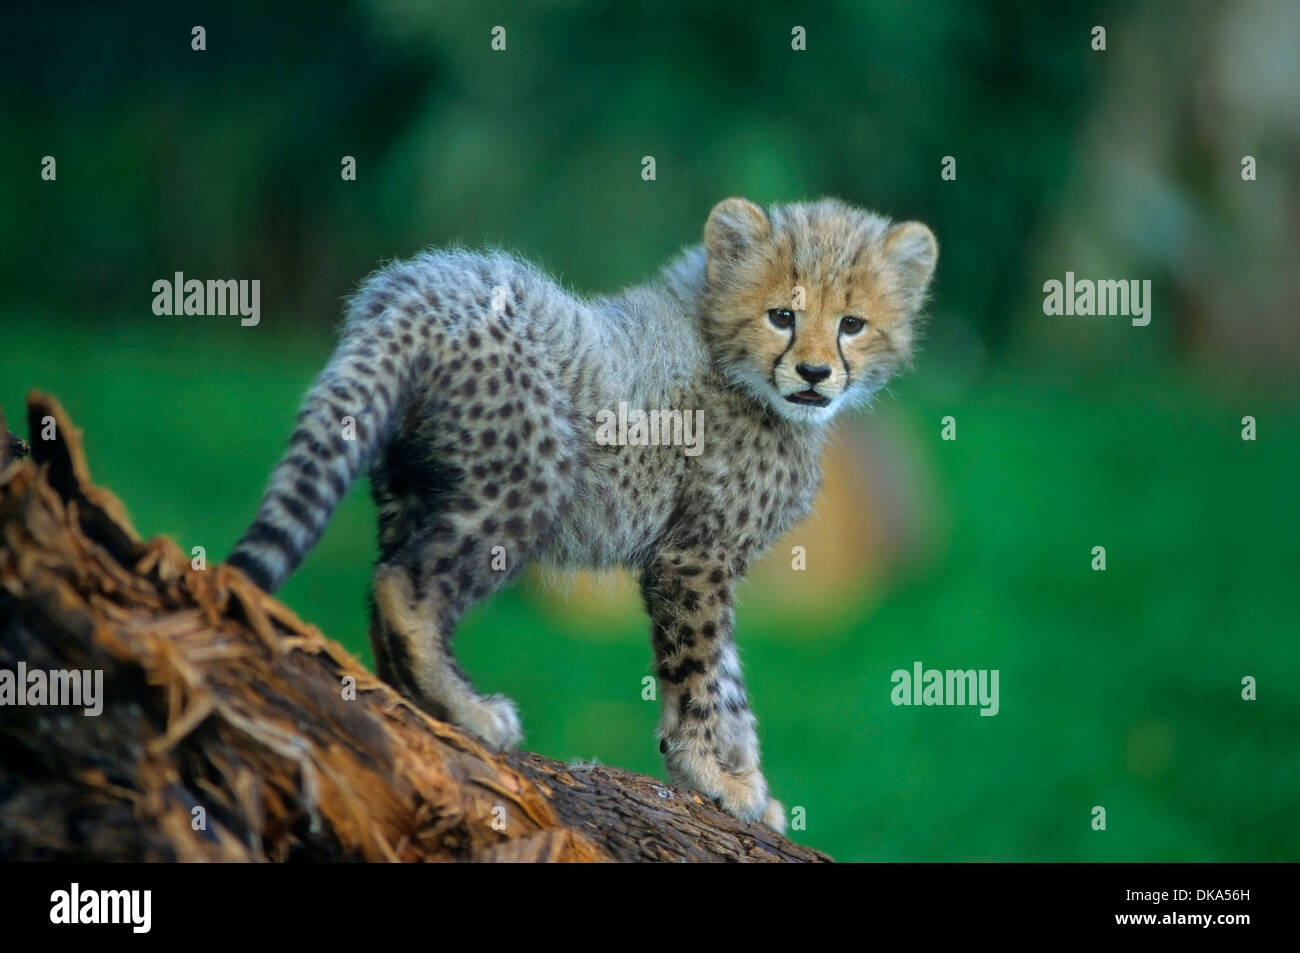 cheetah (Acinonyx jubatus), Gepard - Baby zwei Monate alt, Gepard (Acinonyx jubatus) Stock Photo